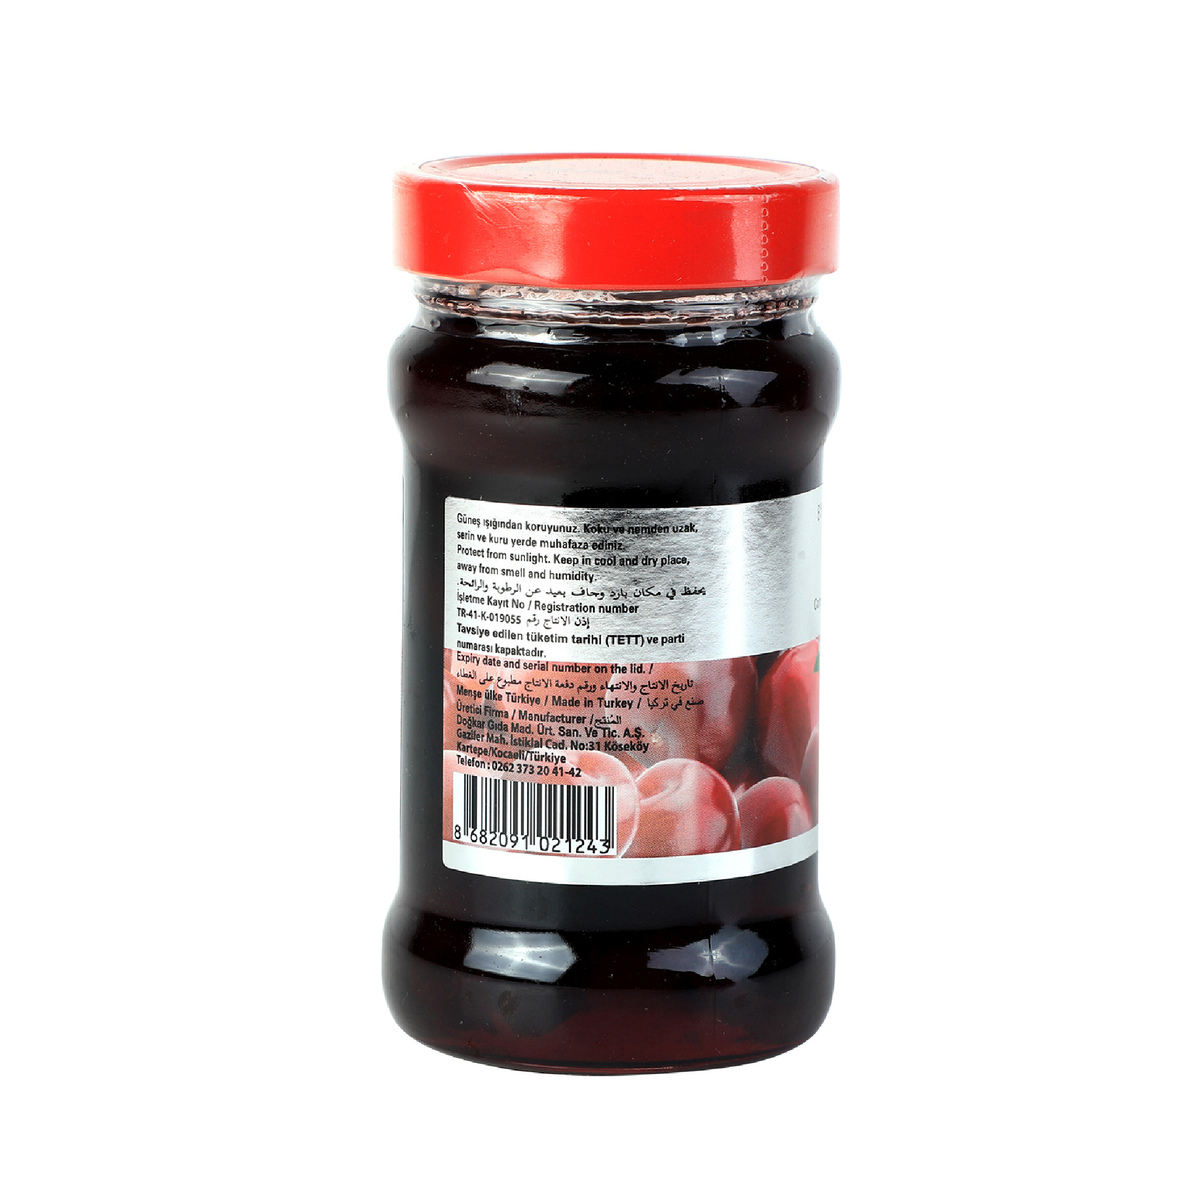 Gurmex Sour Cherry Jam 380g